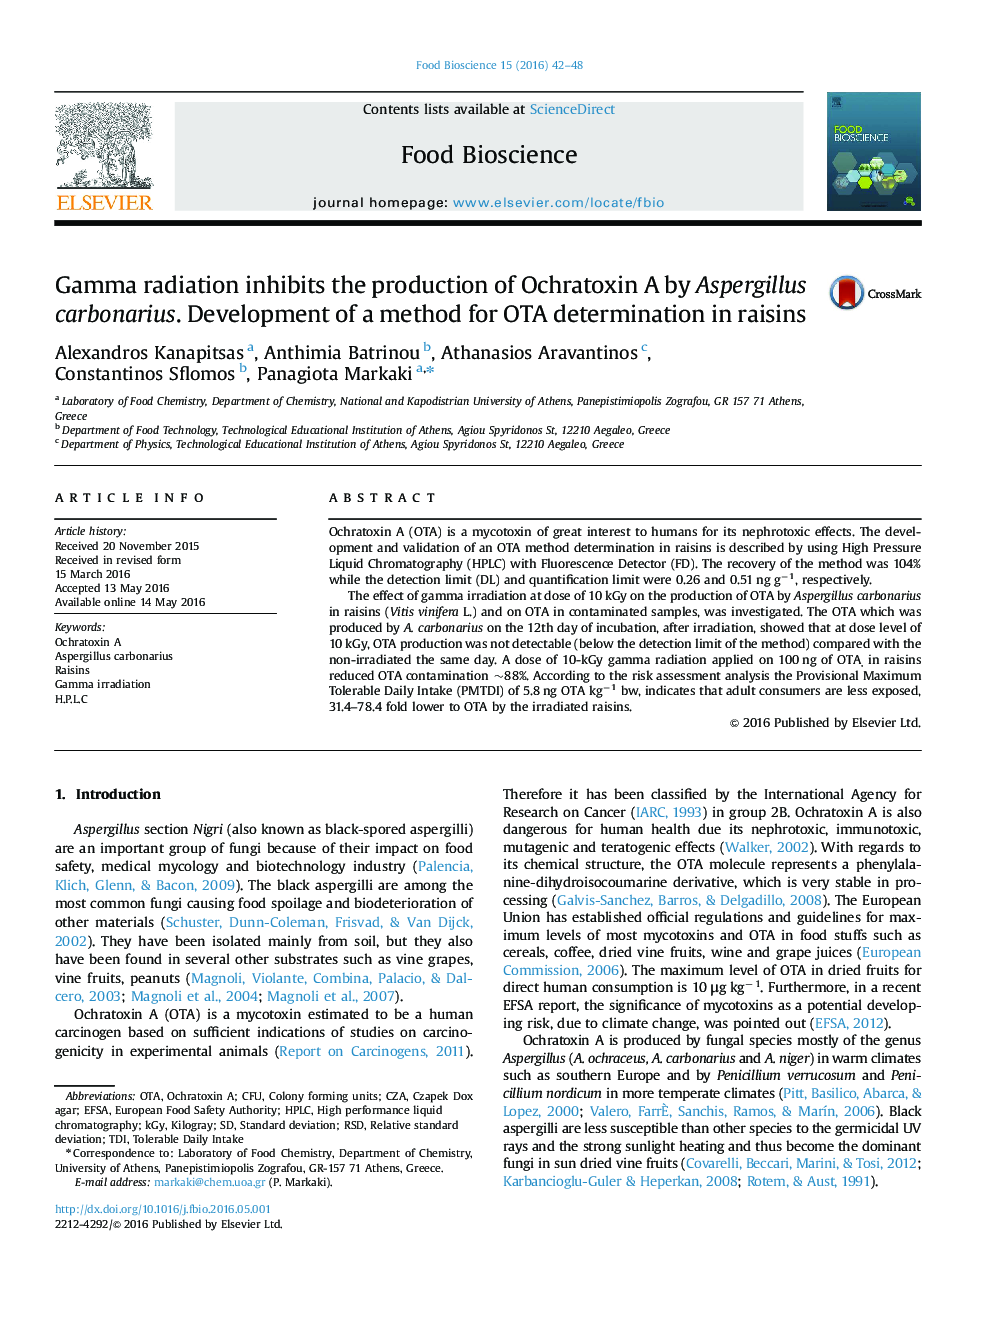 Gamma radiation inhibits the production of Ochratoxin A by Aspergillus carbonarius. Development of a method for OTA determination in raisins